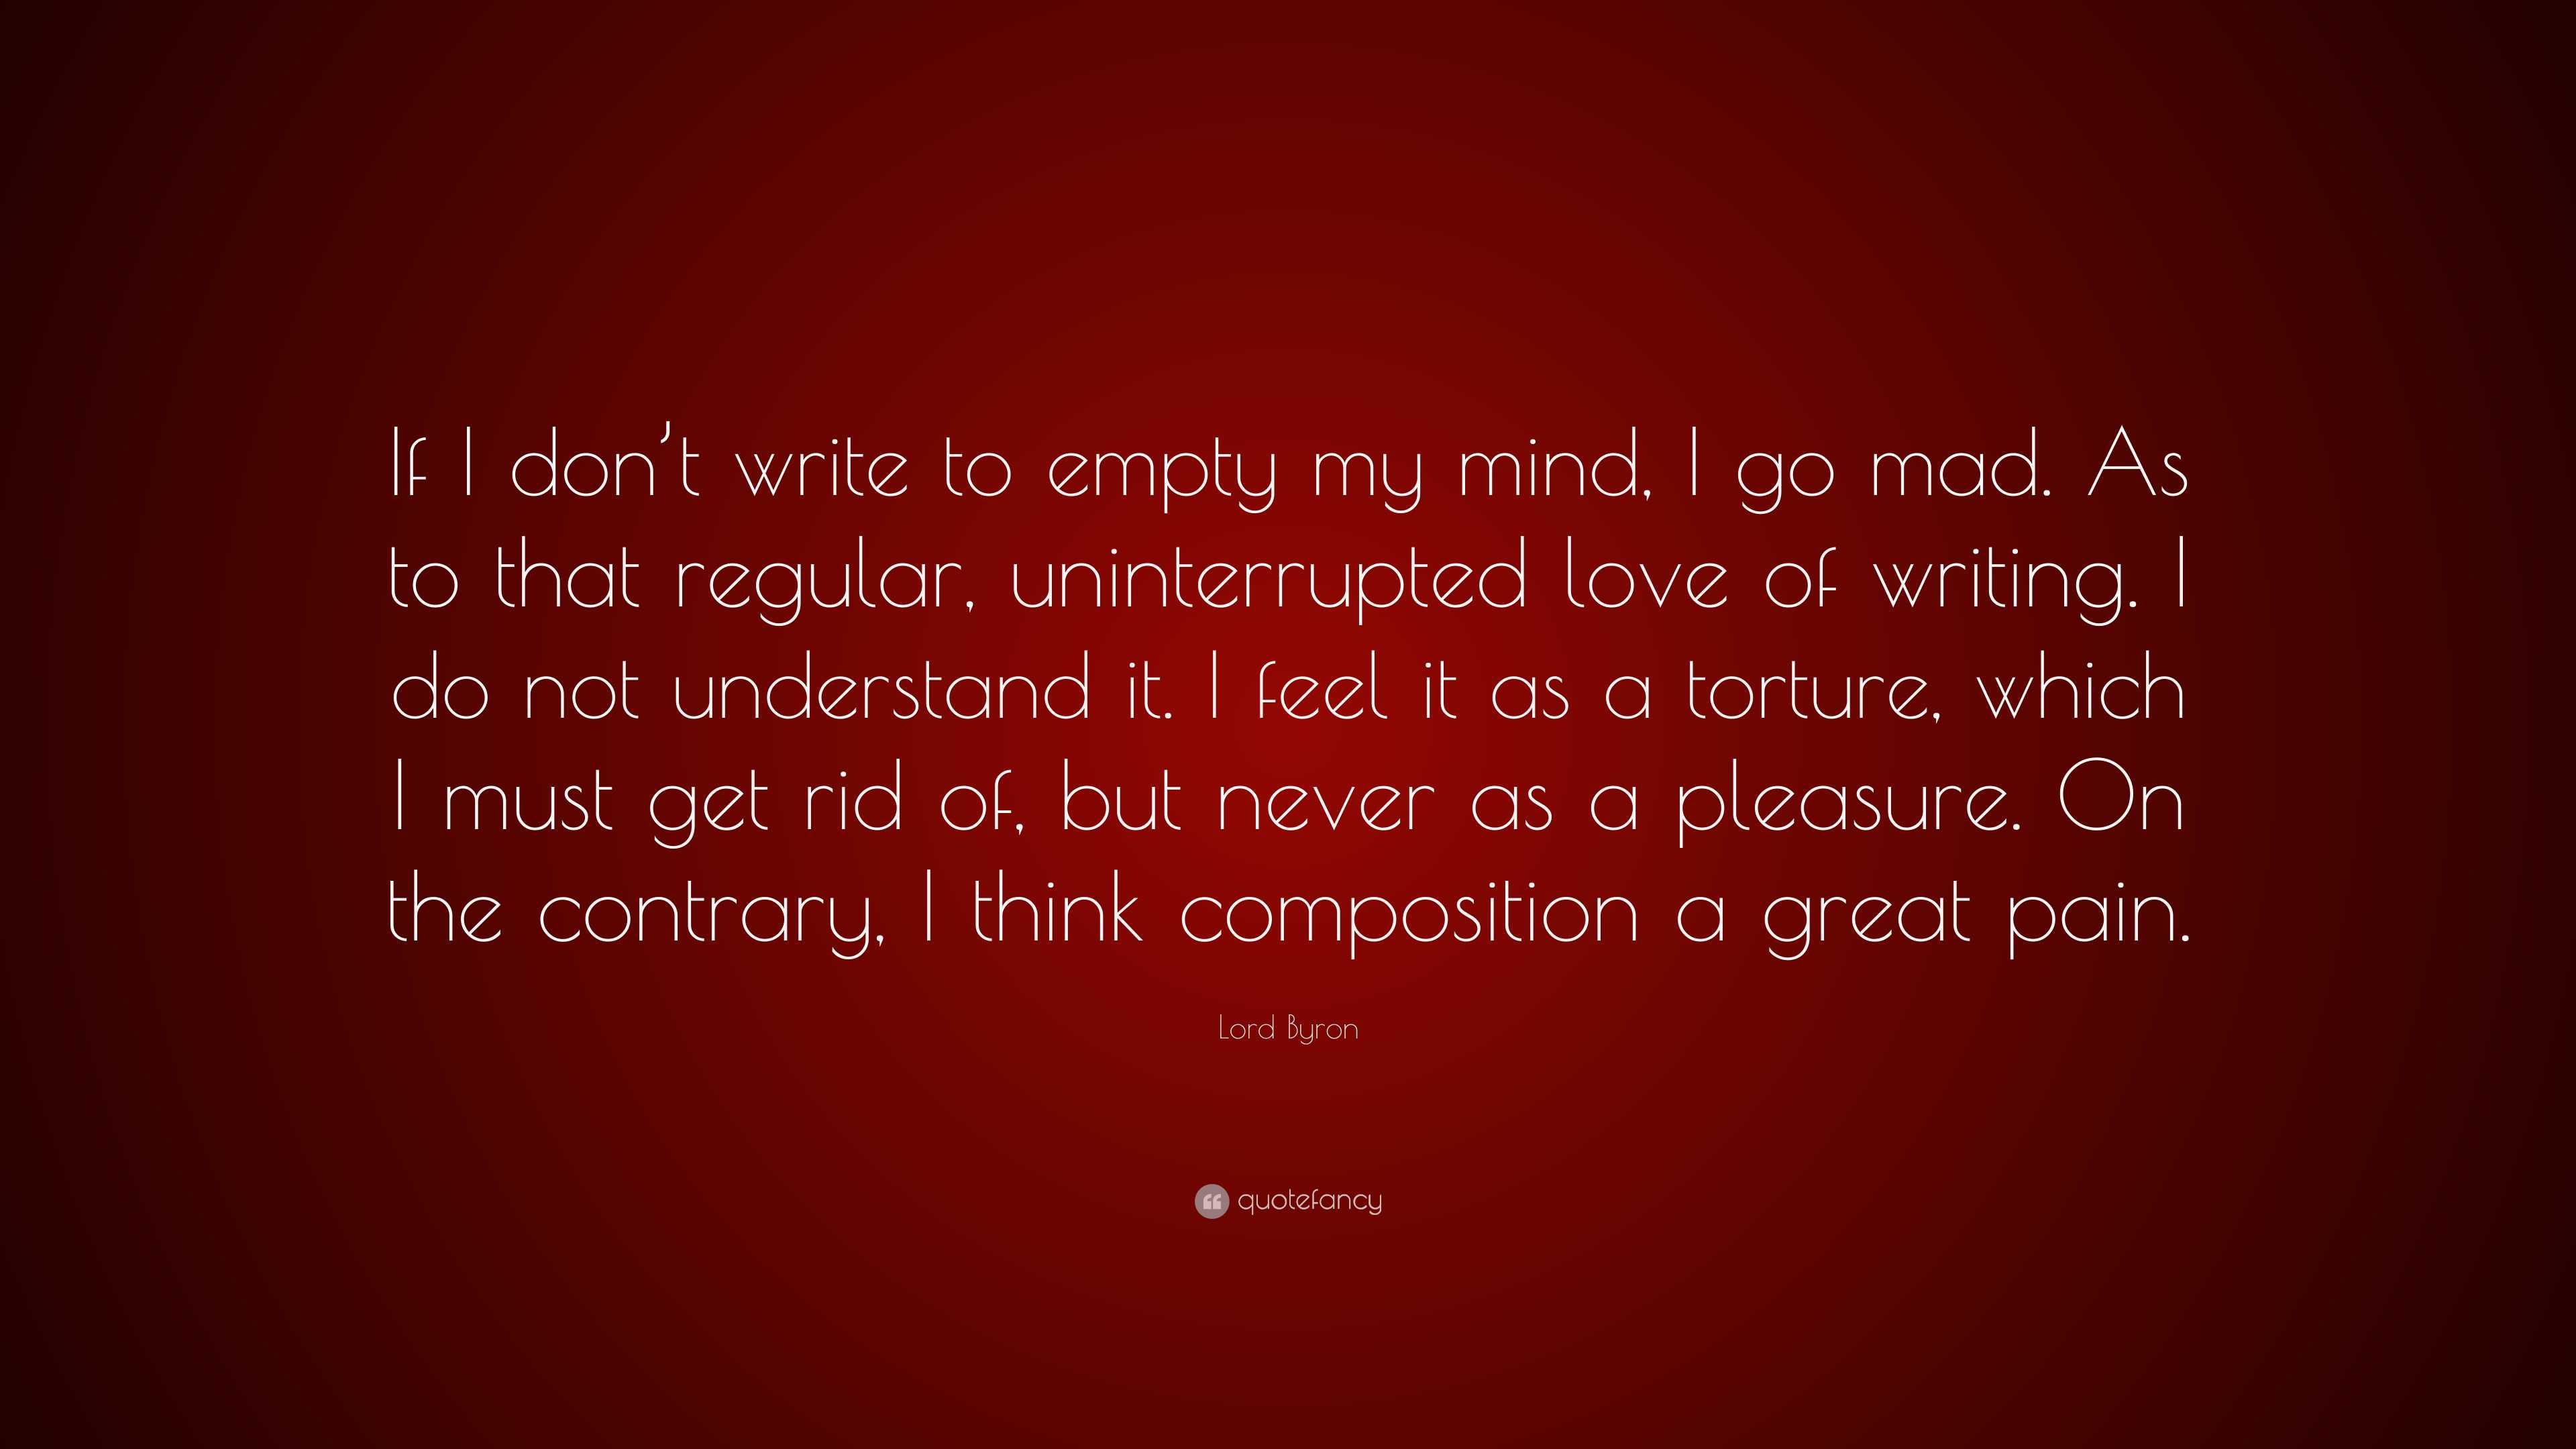 Writing on Empty